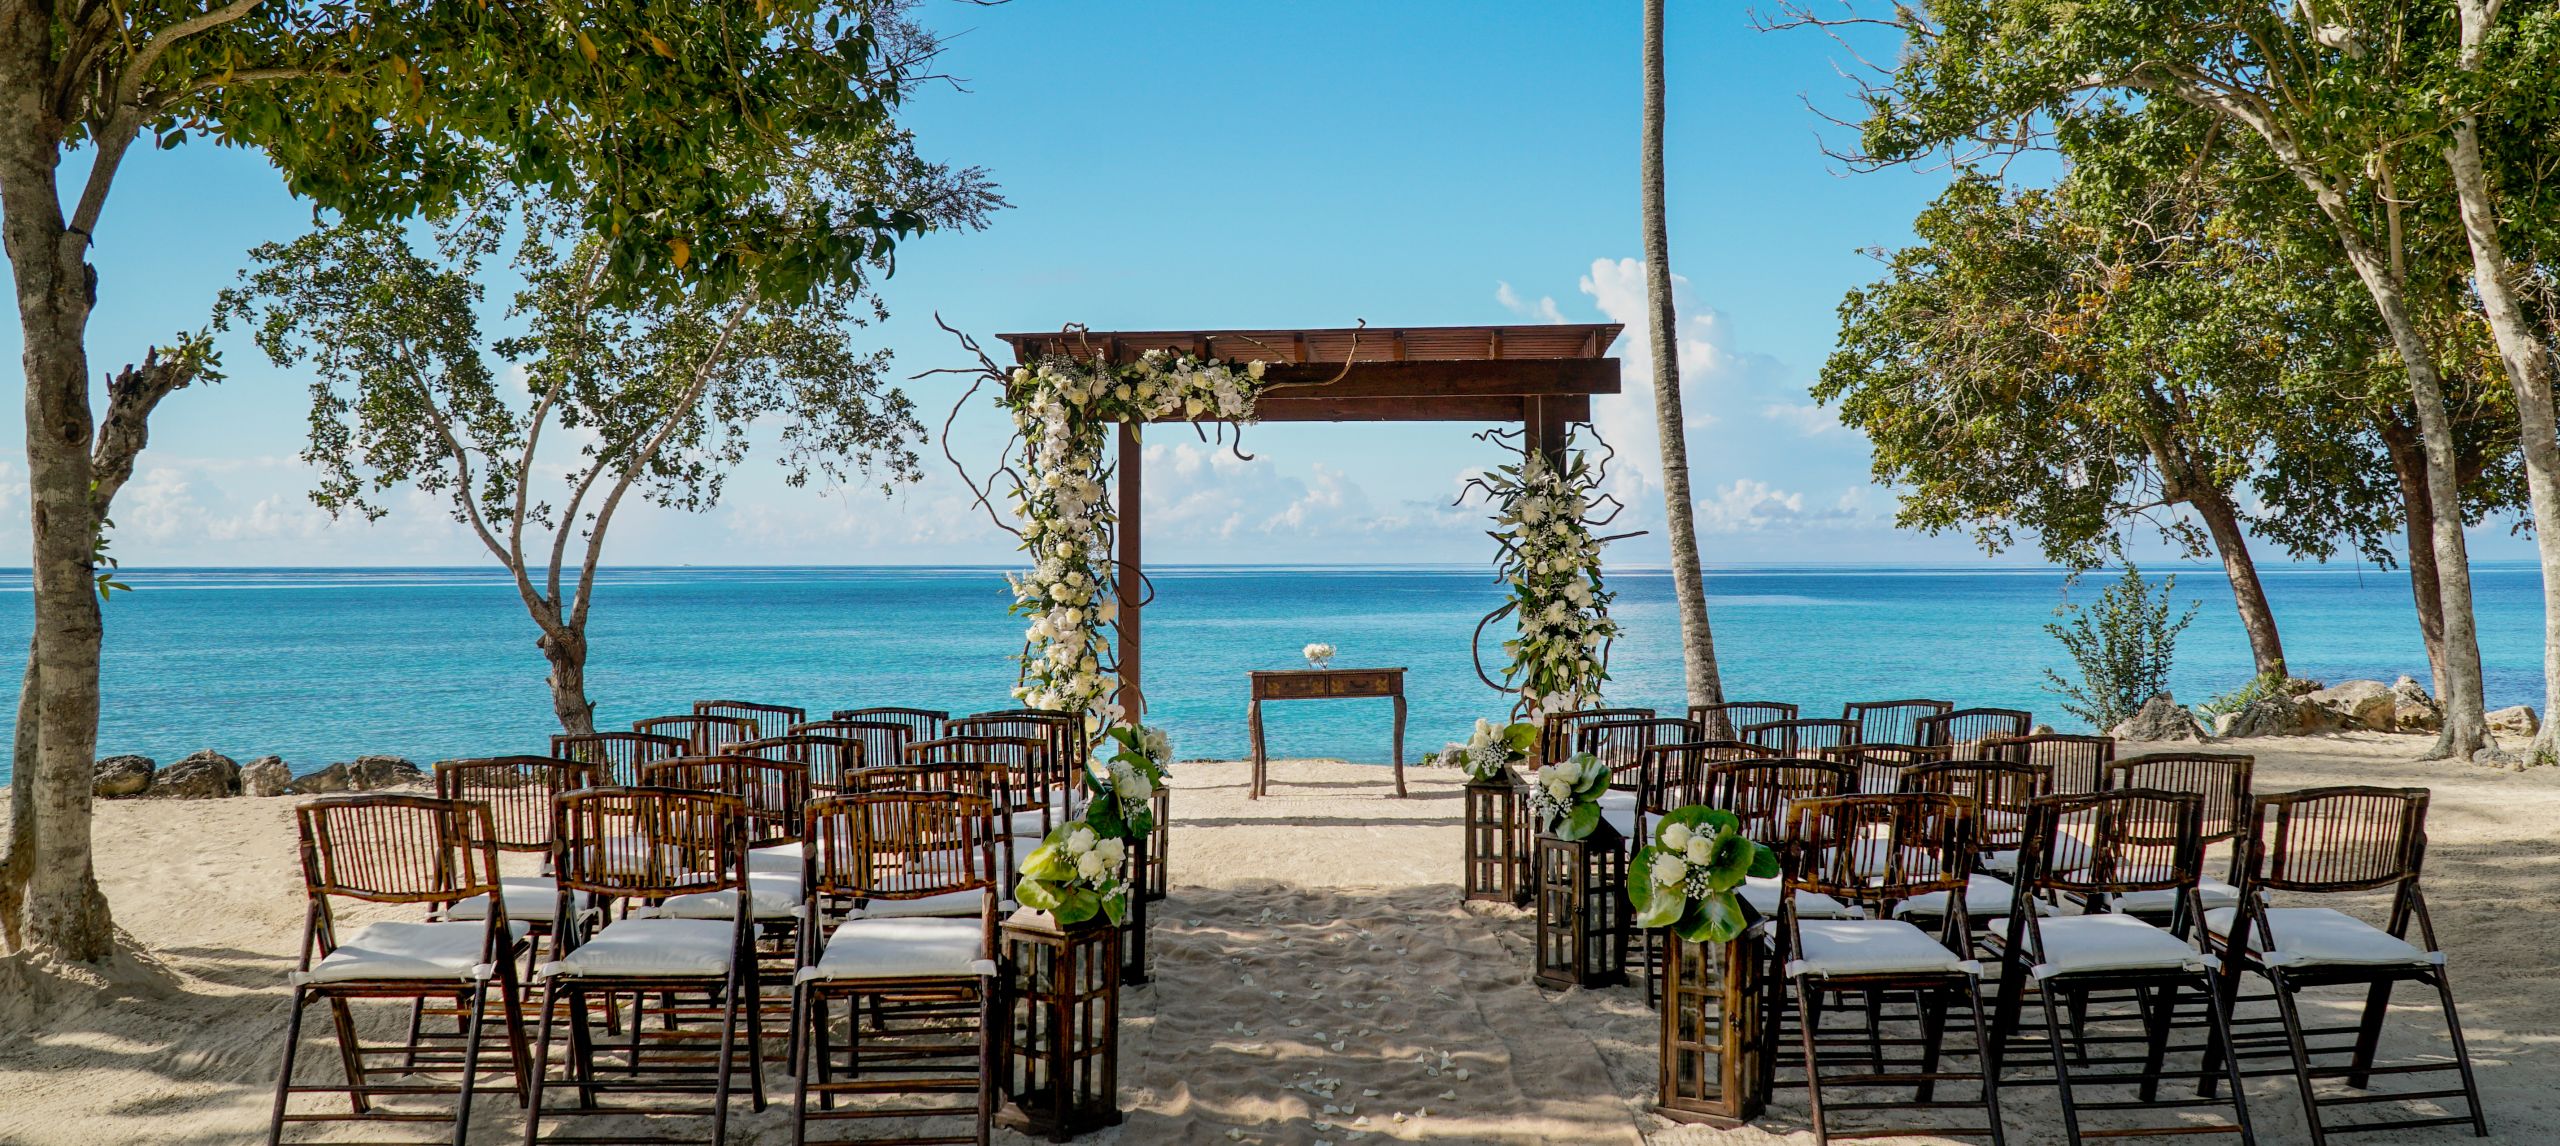 Wedding setup on the beach with ocean as backdrop